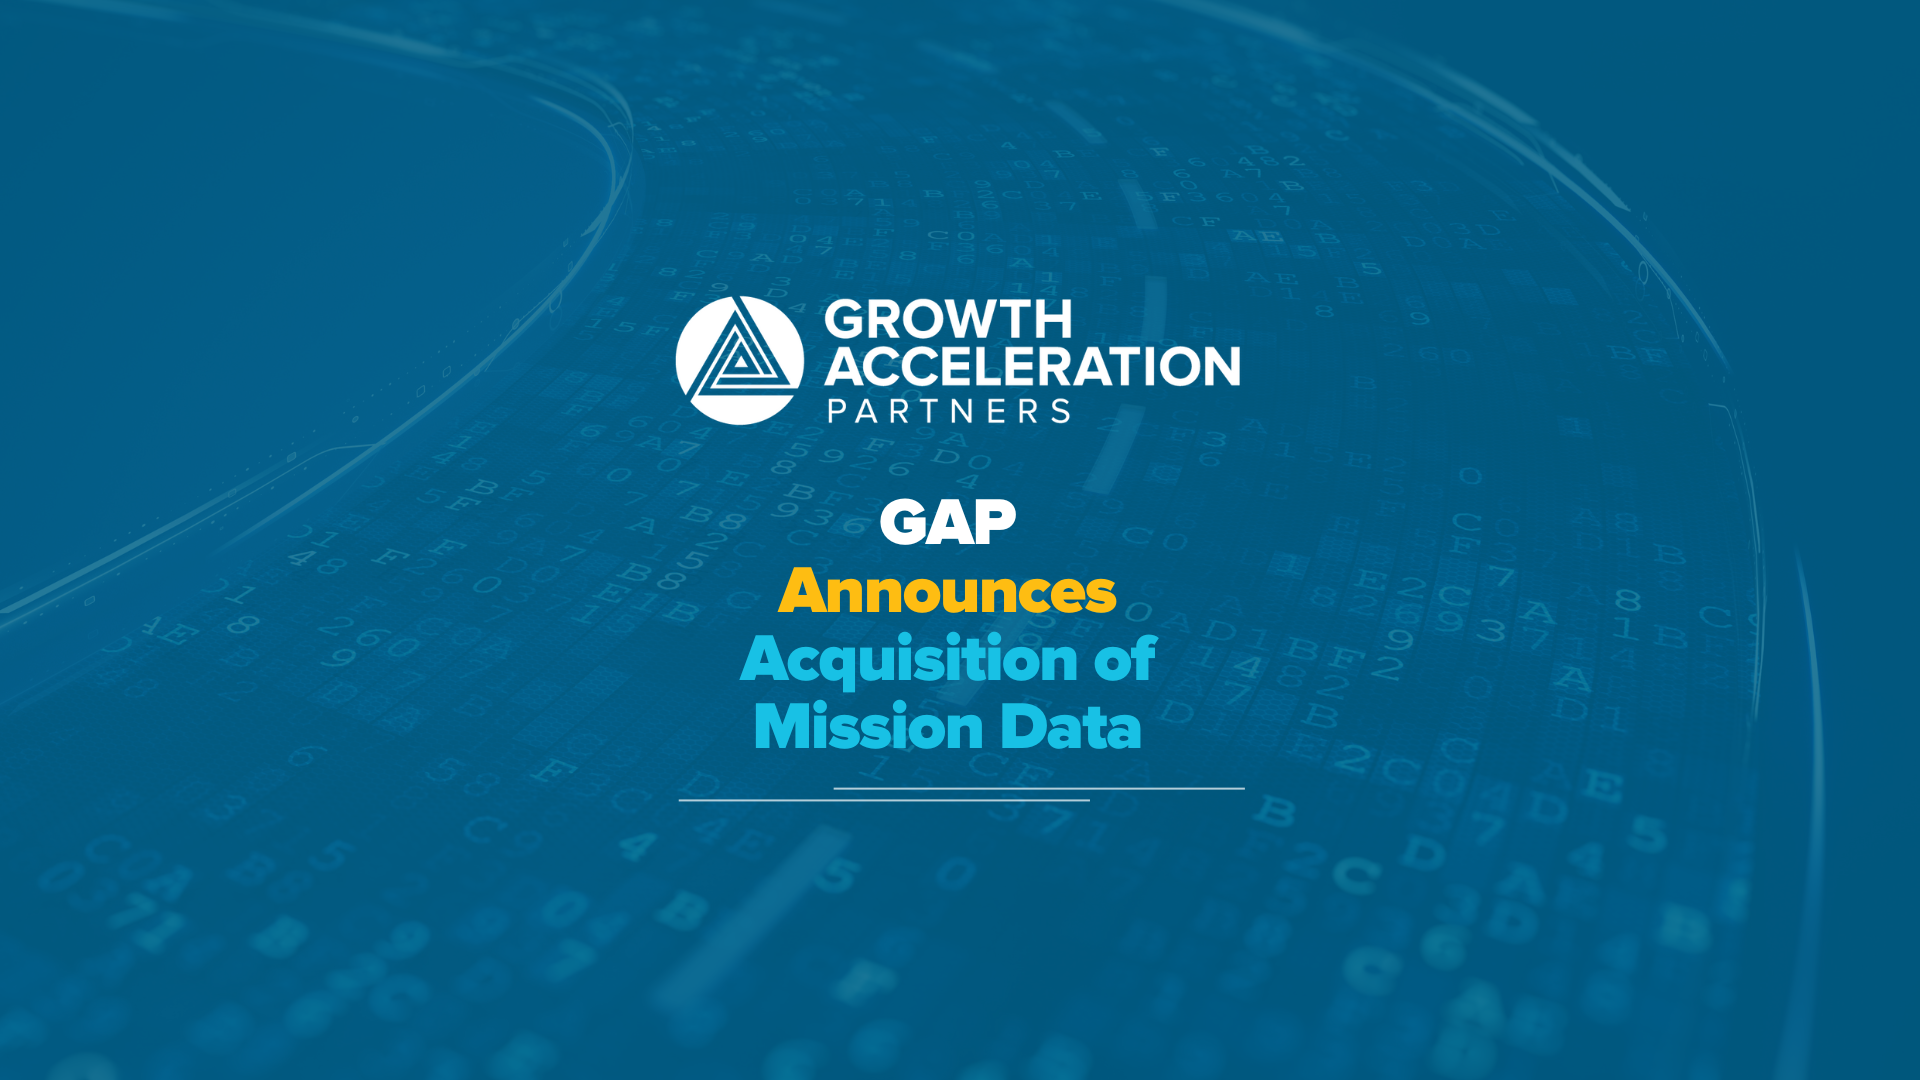 Growth Acceleration Partners Announces Acquisition of Mission Data